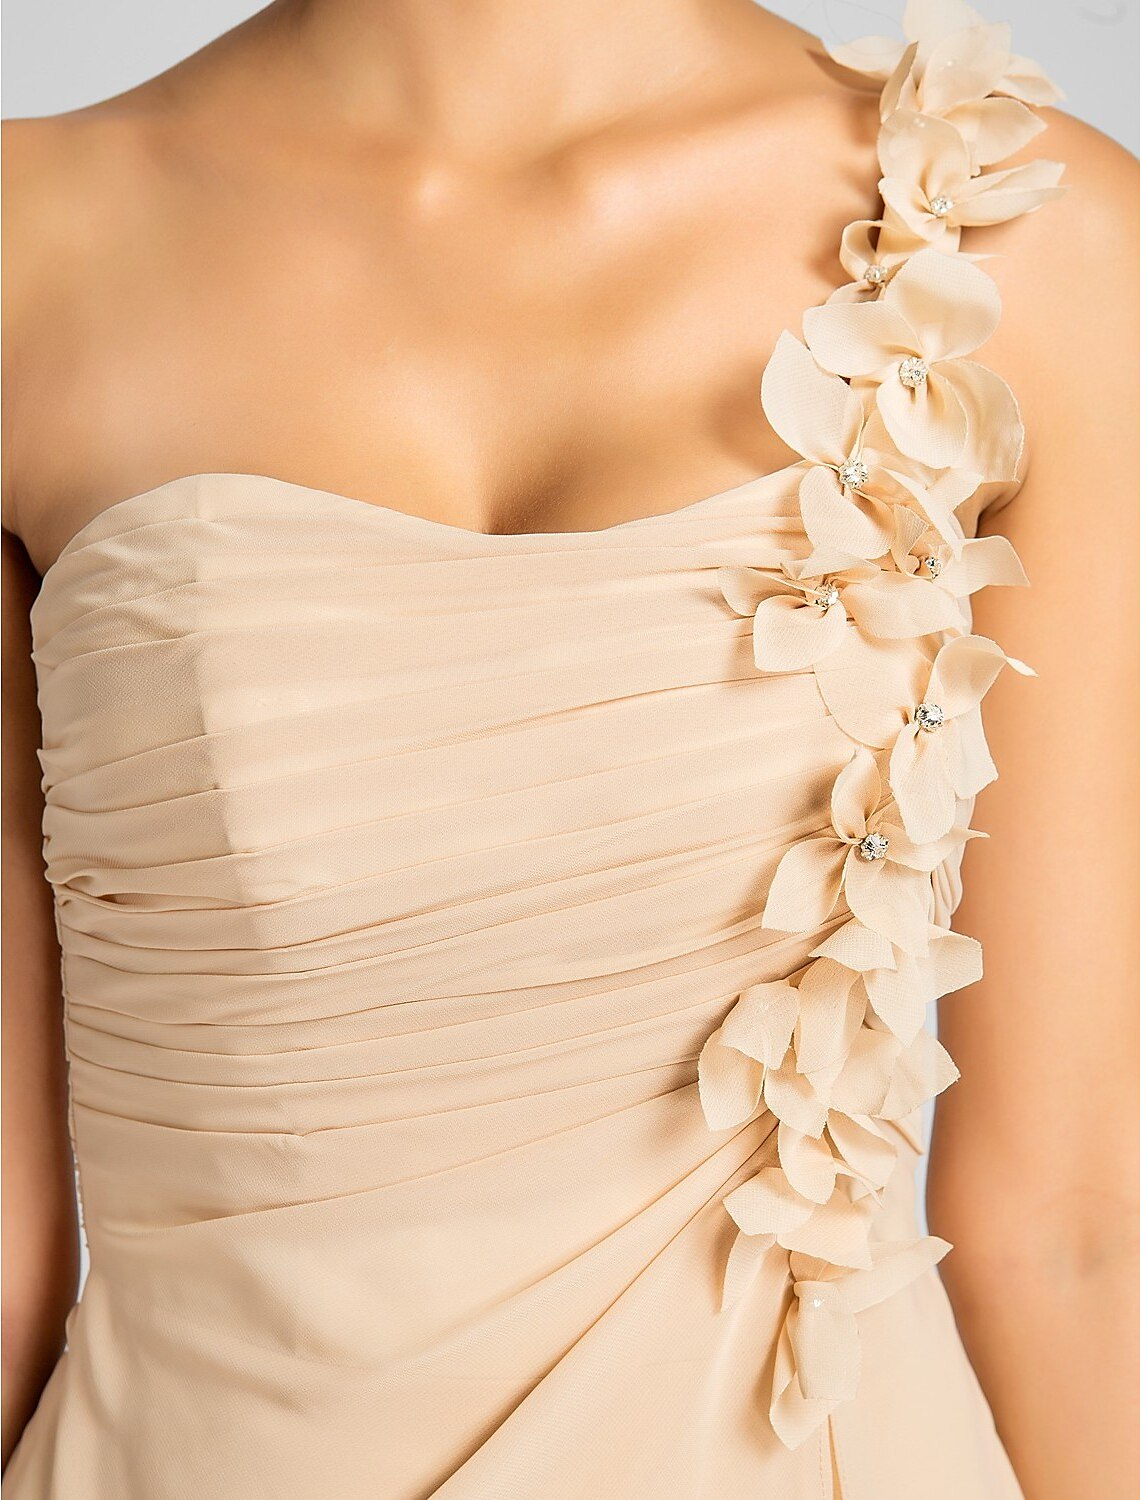 Sheath / Column Bridesmaid Dress One Shoulder Sleeveless Knee Length Chiffon with Side Draping / Flower